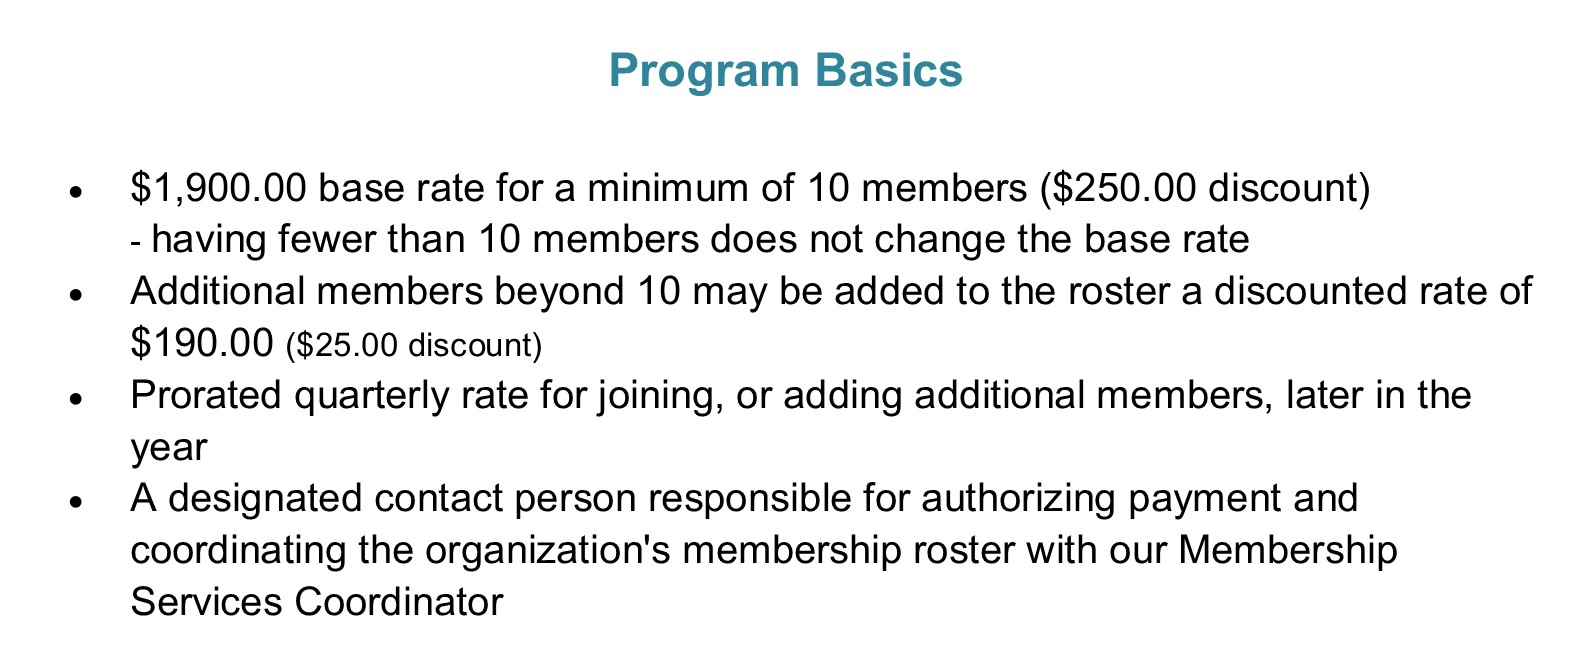 Corporate Member Basics